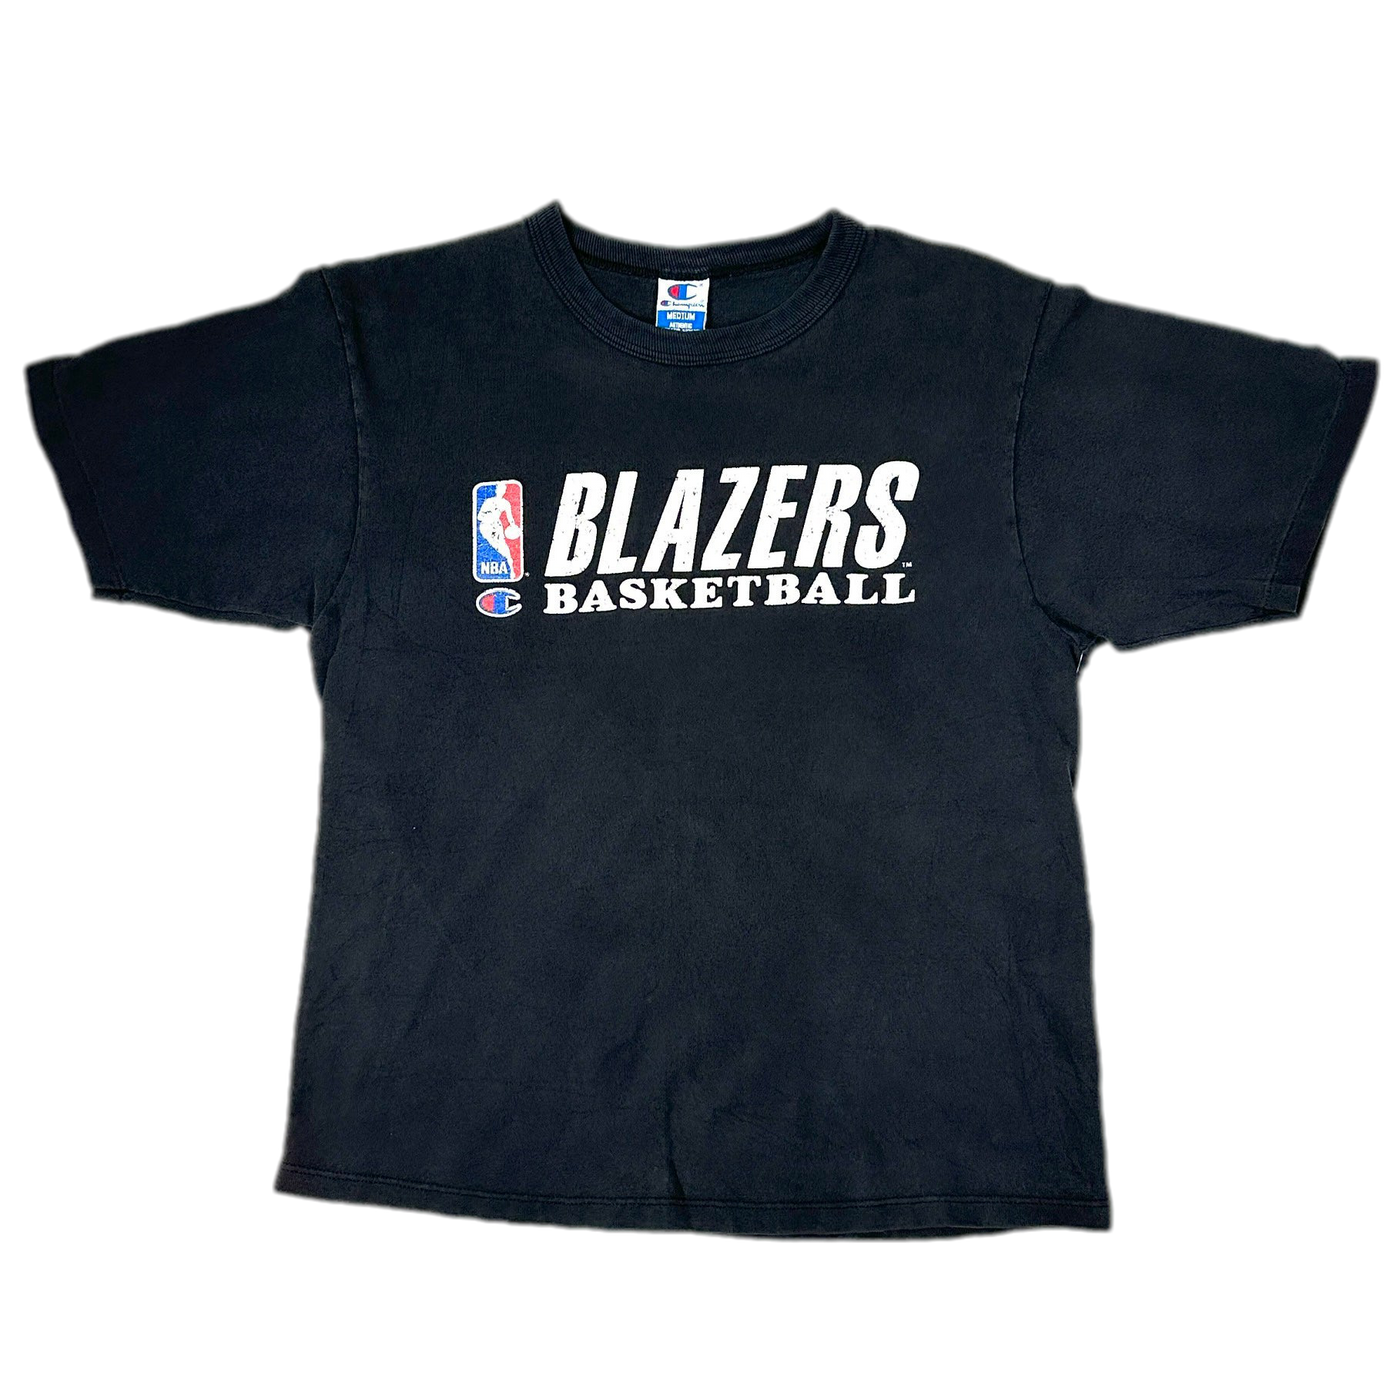 00's Blazers Basketball Sports T-shirt sz M